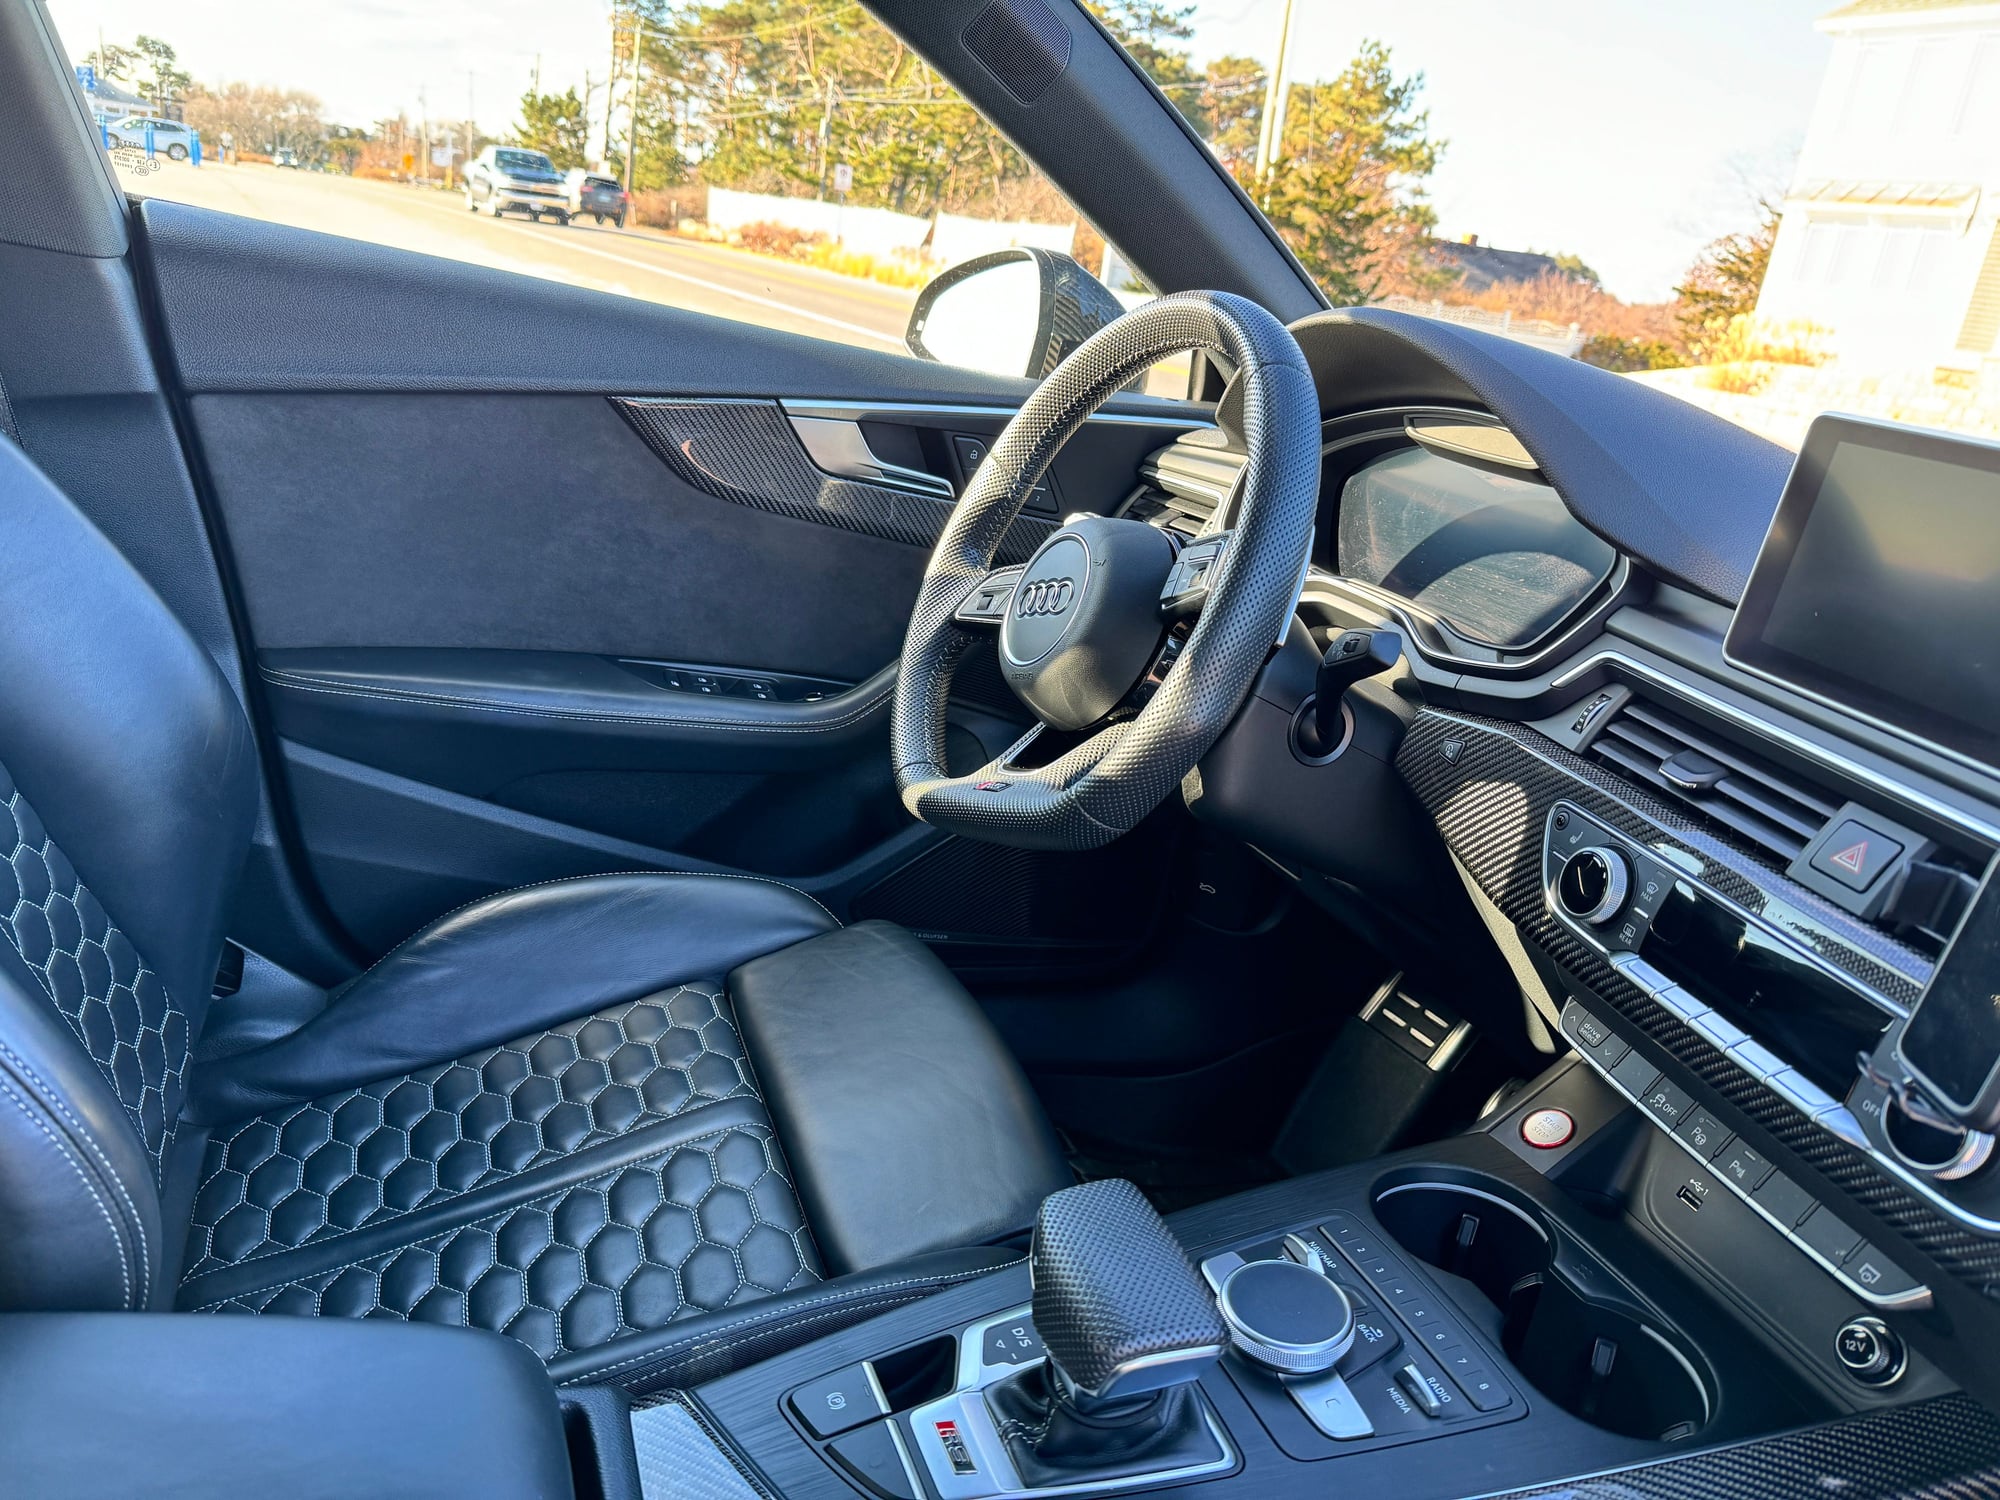 2019 Audi RS5 Sportback - 2019 Audi RS5 Black XPEL Stealth Wrap Absolutely Stunning! - Used - VIN WUABWCF51KA903530 - 13,500 Miles - 6 cyl - AWD - Automatic - Sedan - Black - North Hampton, NH 03862, United States